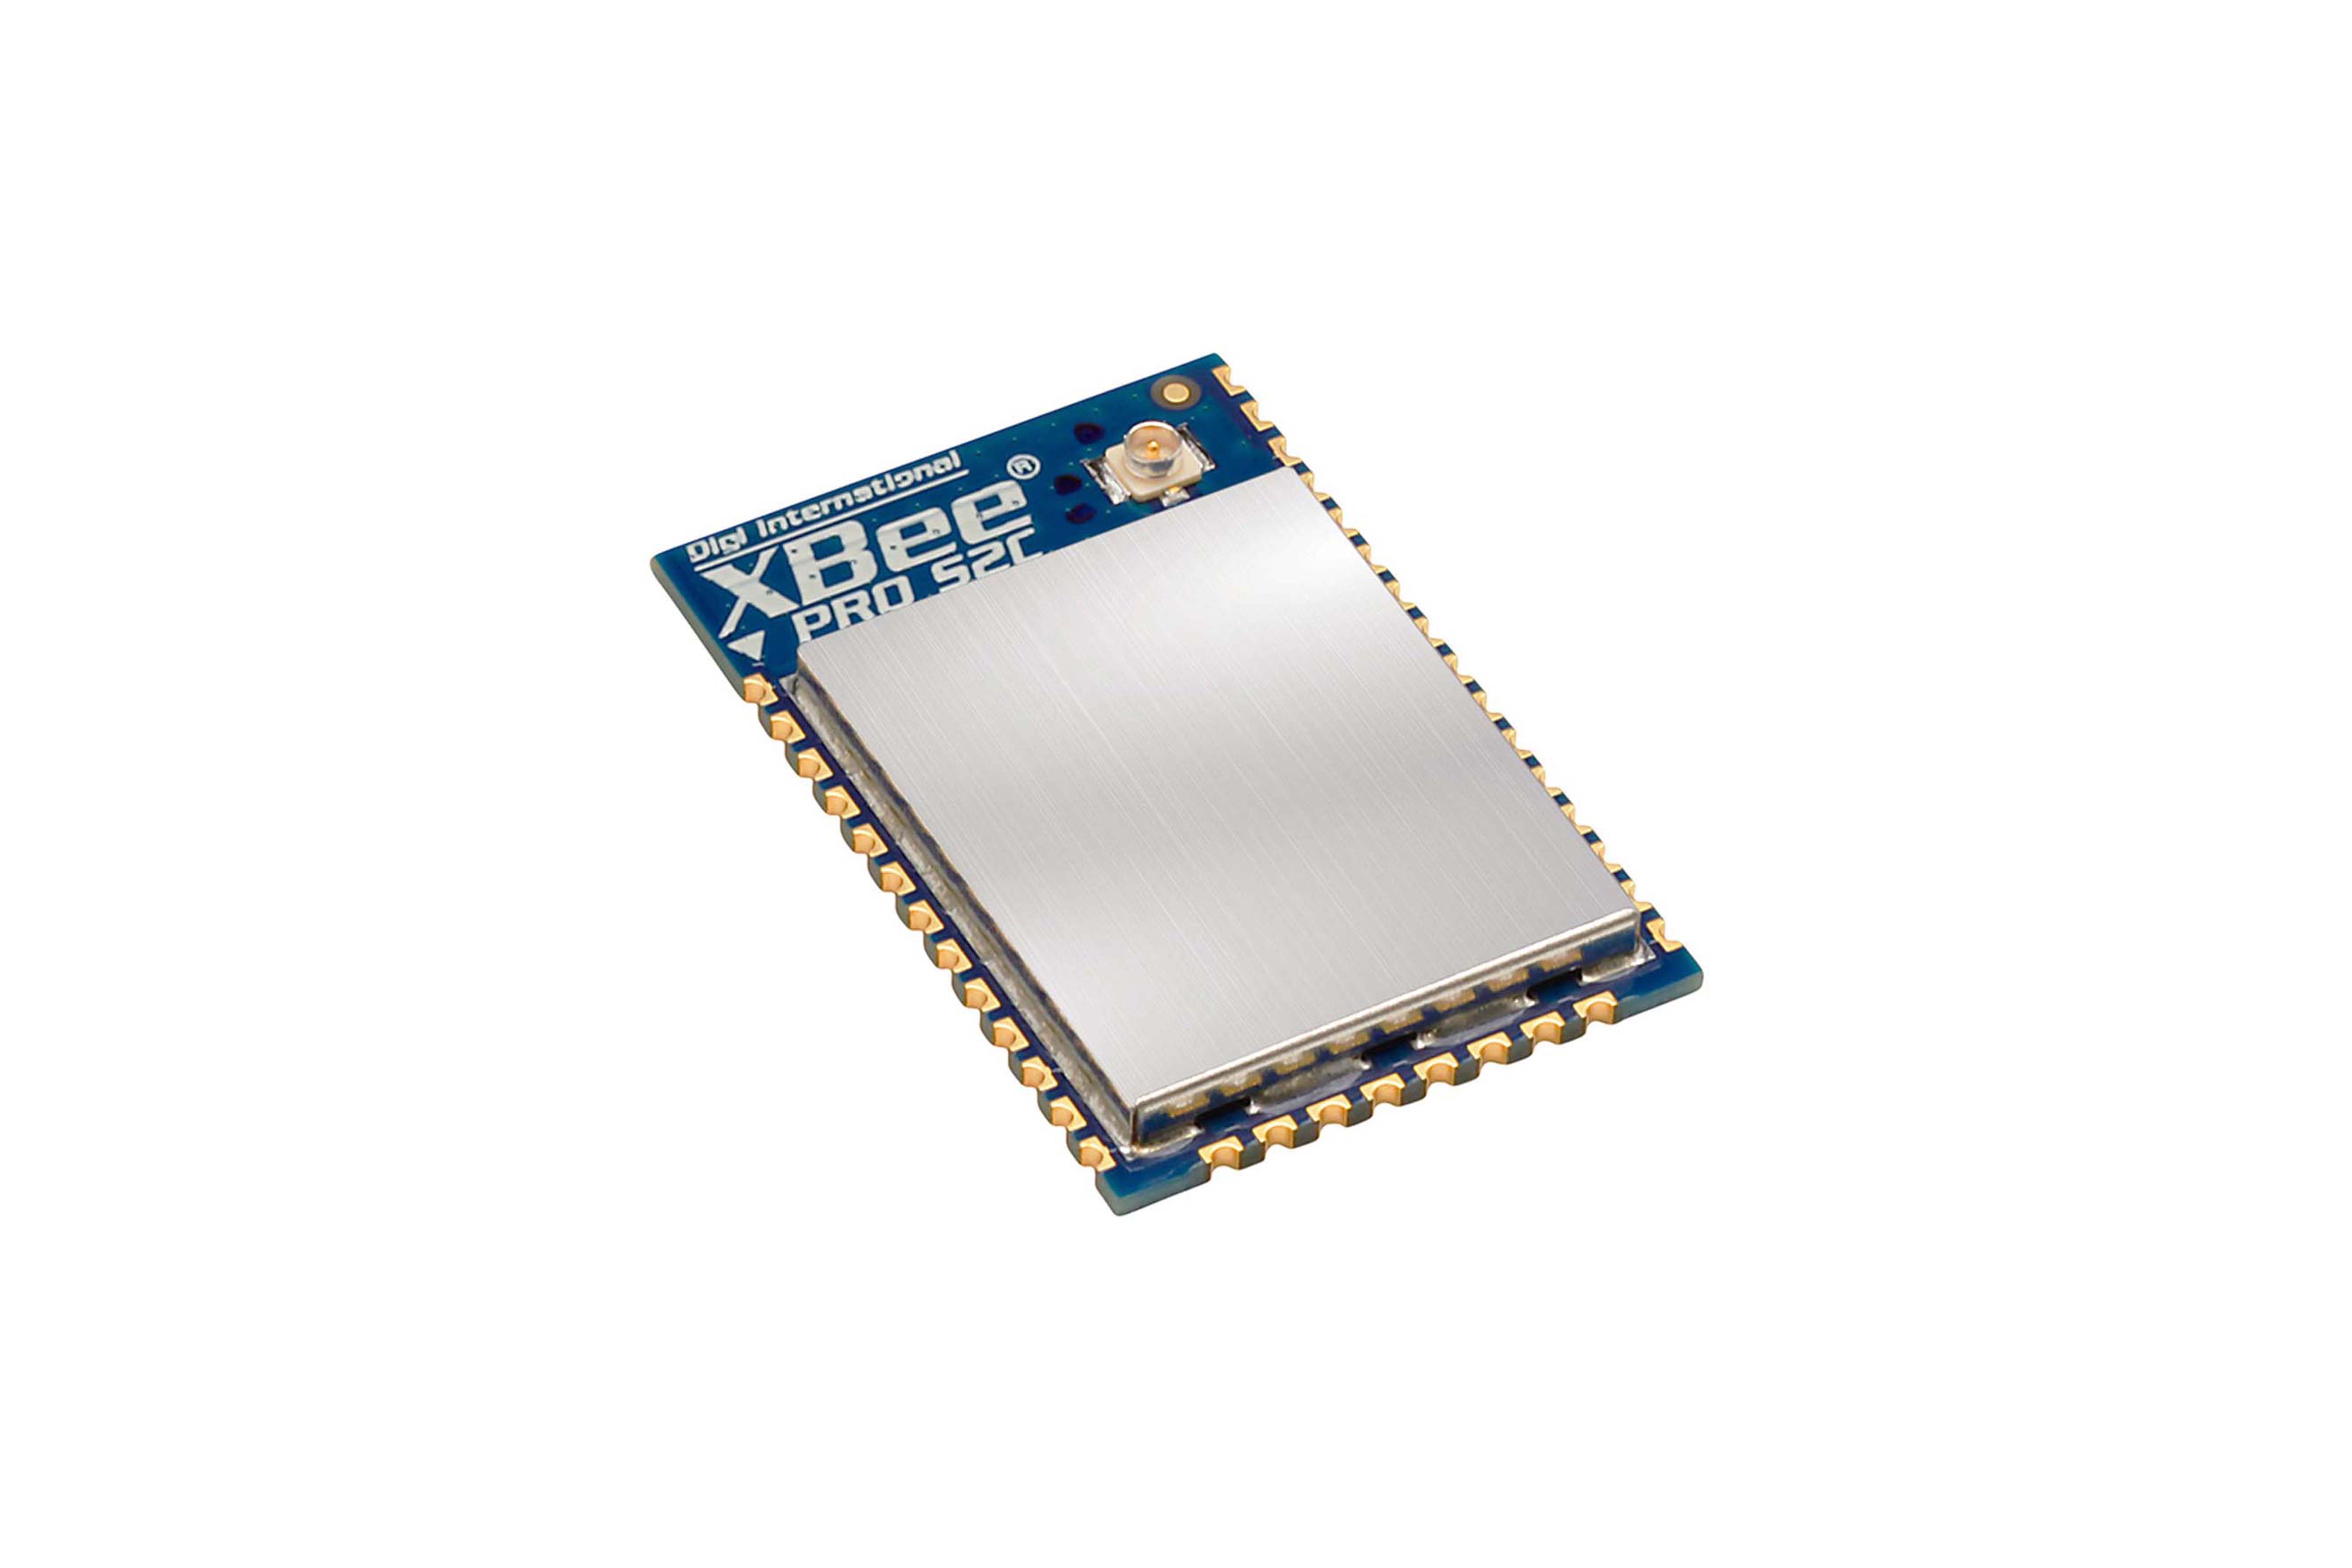 Xbee-PRO S2C 802.15.4, 2.4 GHz, SMT